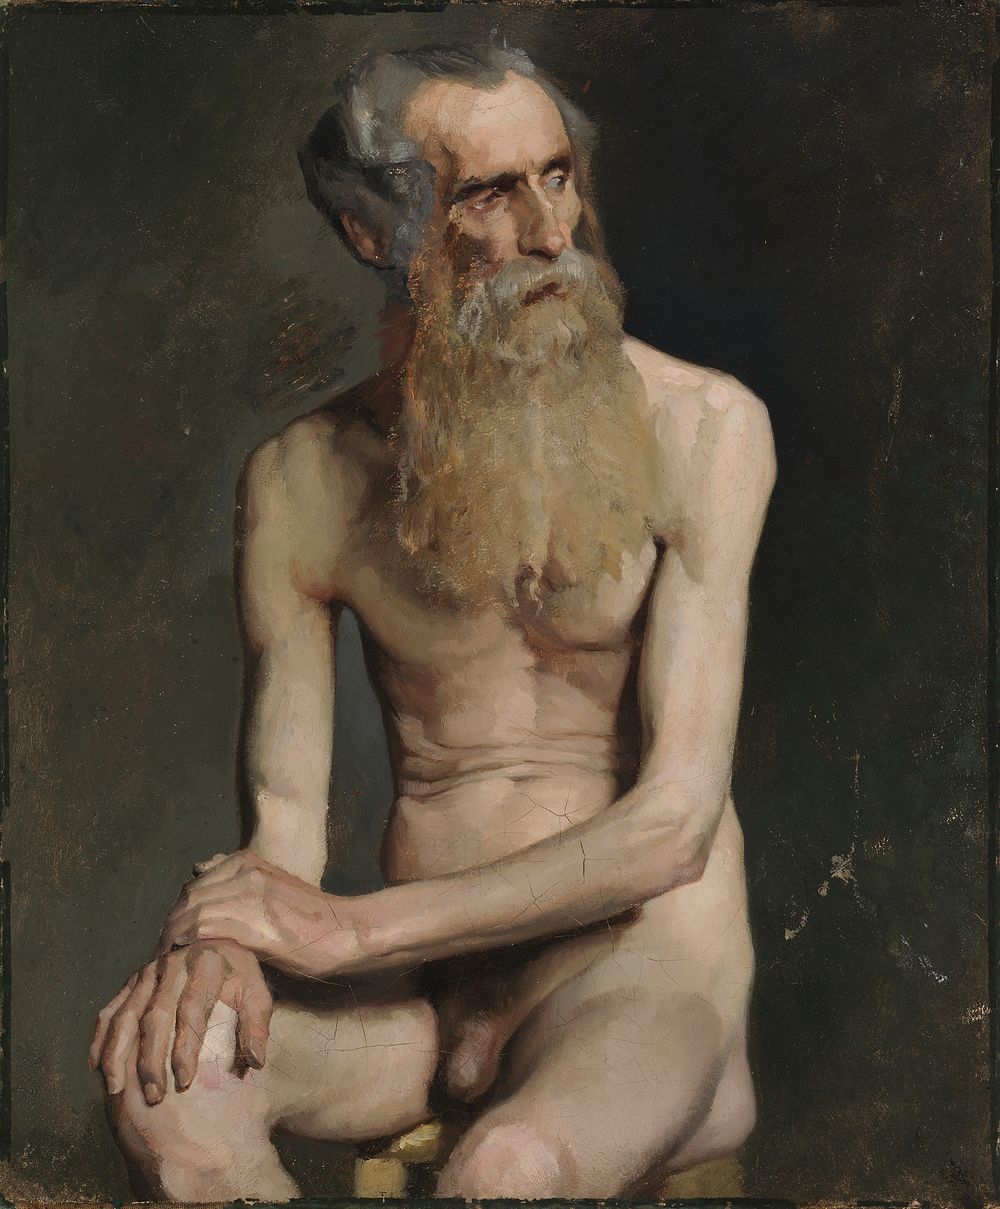 Old man seated, academy study, 1874 - 1875, by Albert Edelfelt